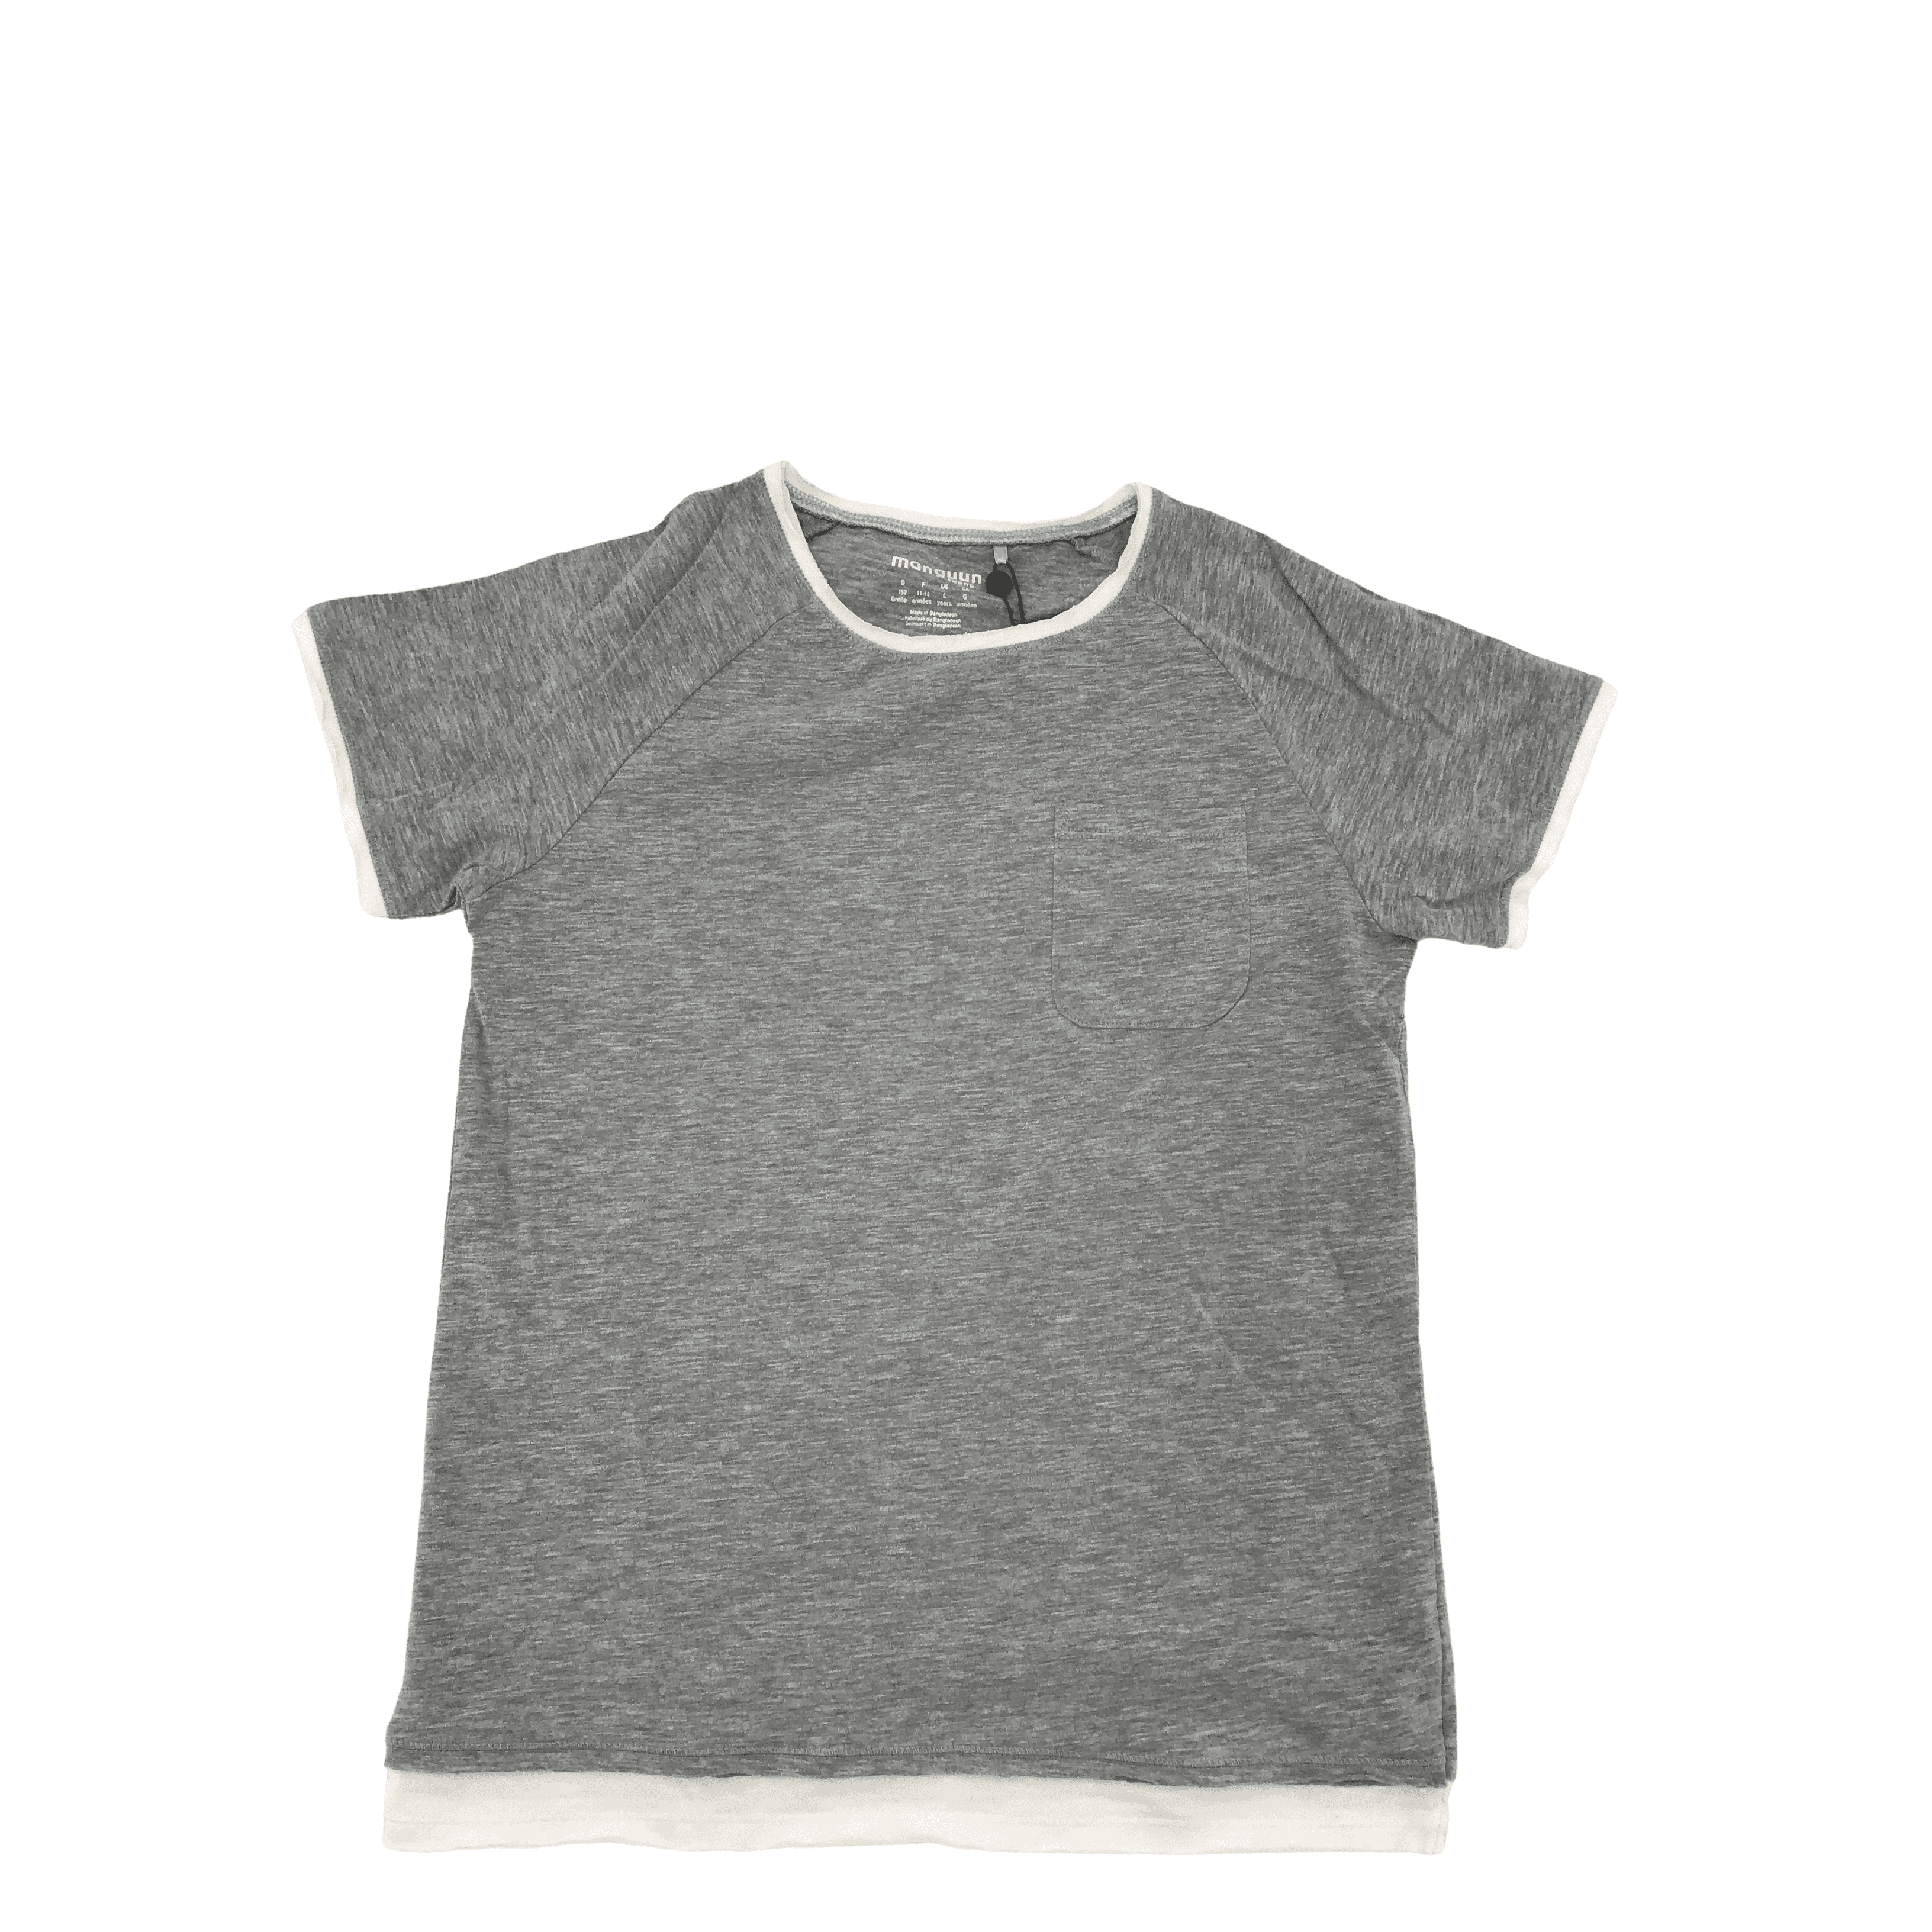 Manguun Children's T-Shirt / Light Grey / Kid's Summer Clothes / Various Sizes